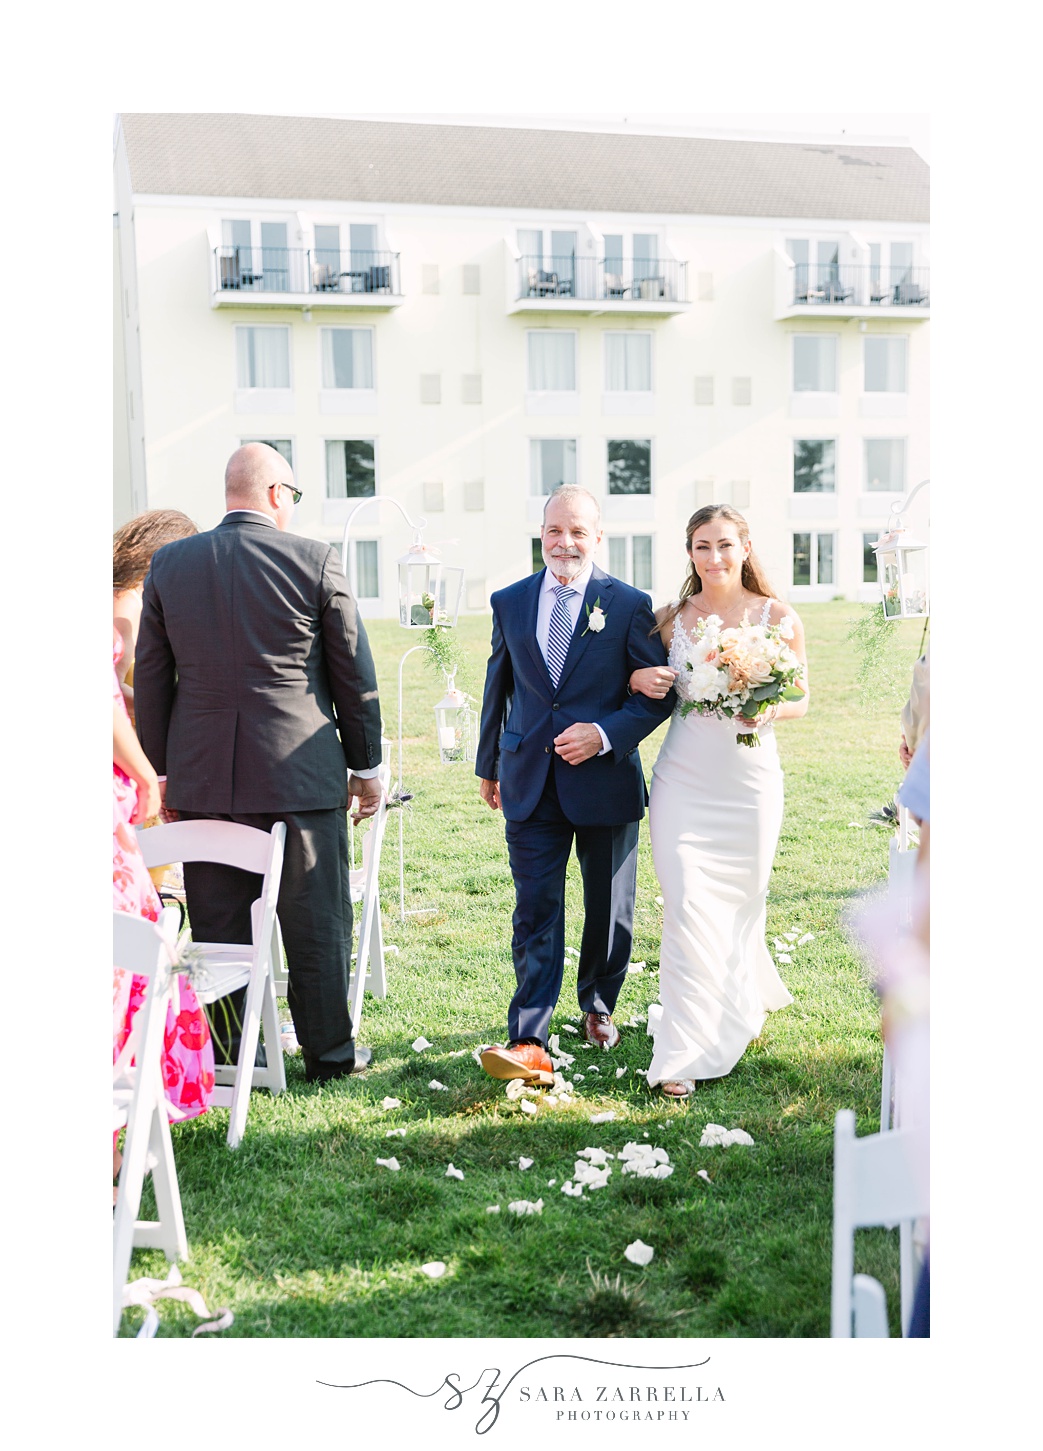 bride walks down aisle with dad during Gurney’s Newport Resort wedding day